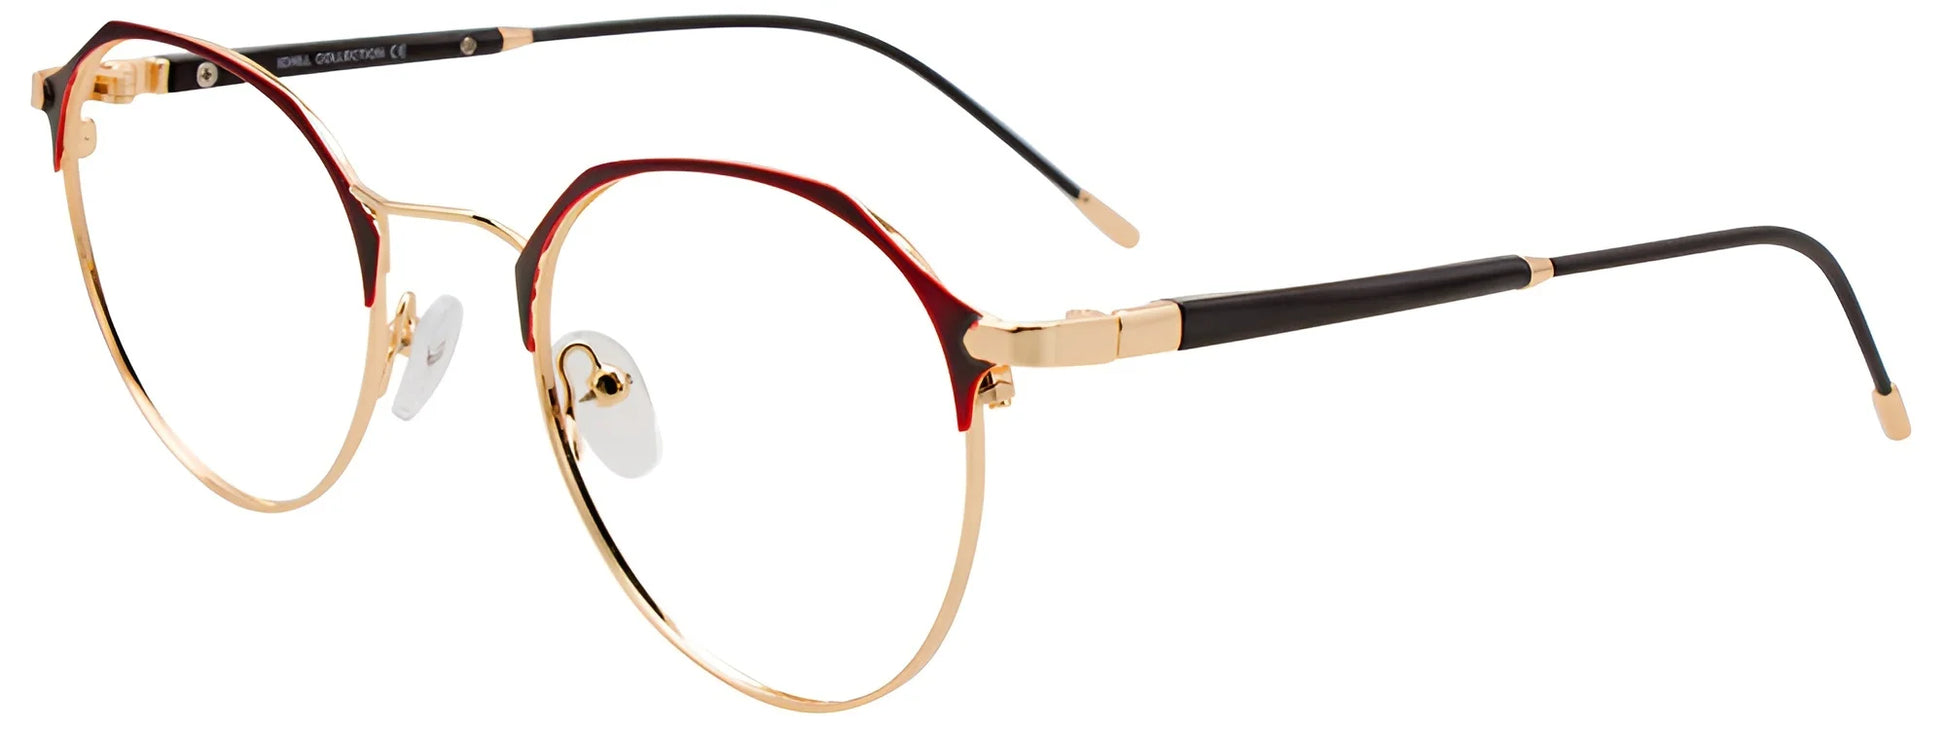 iCHILL C7022 Eyeglasses Dark Red & Gold